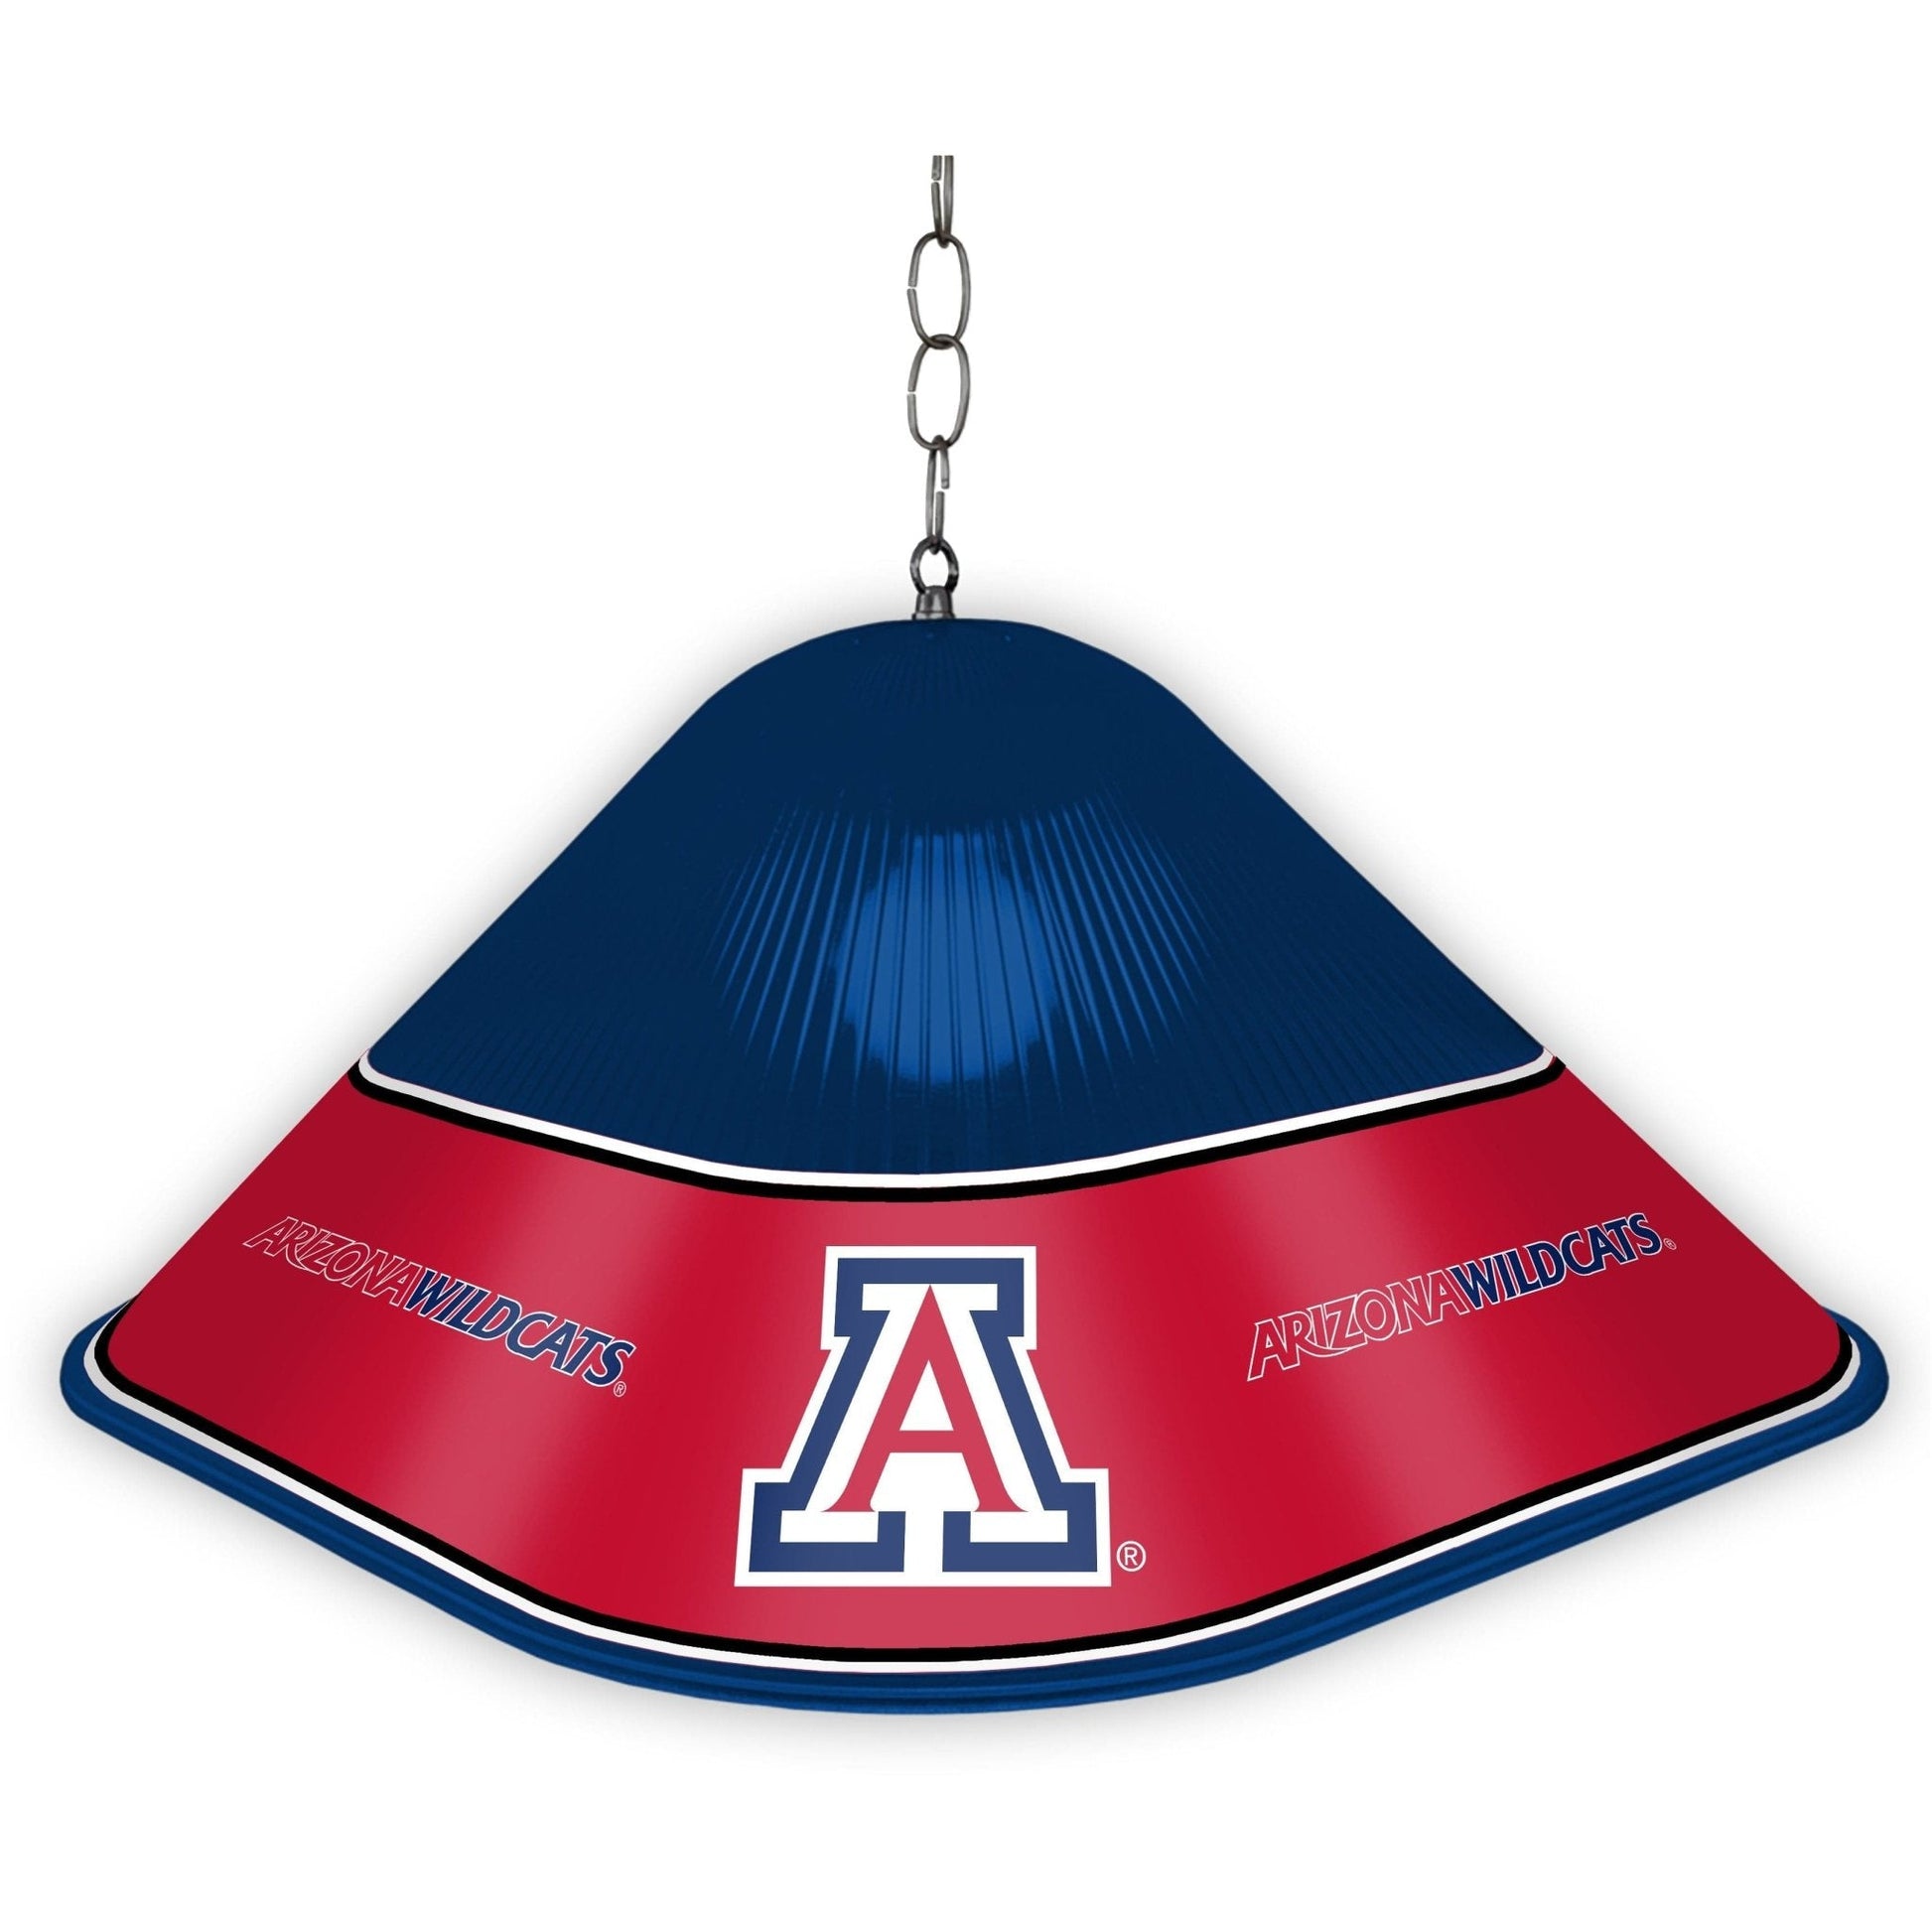 Arizona Wildcats: Game Table Light - The Fan-Brand